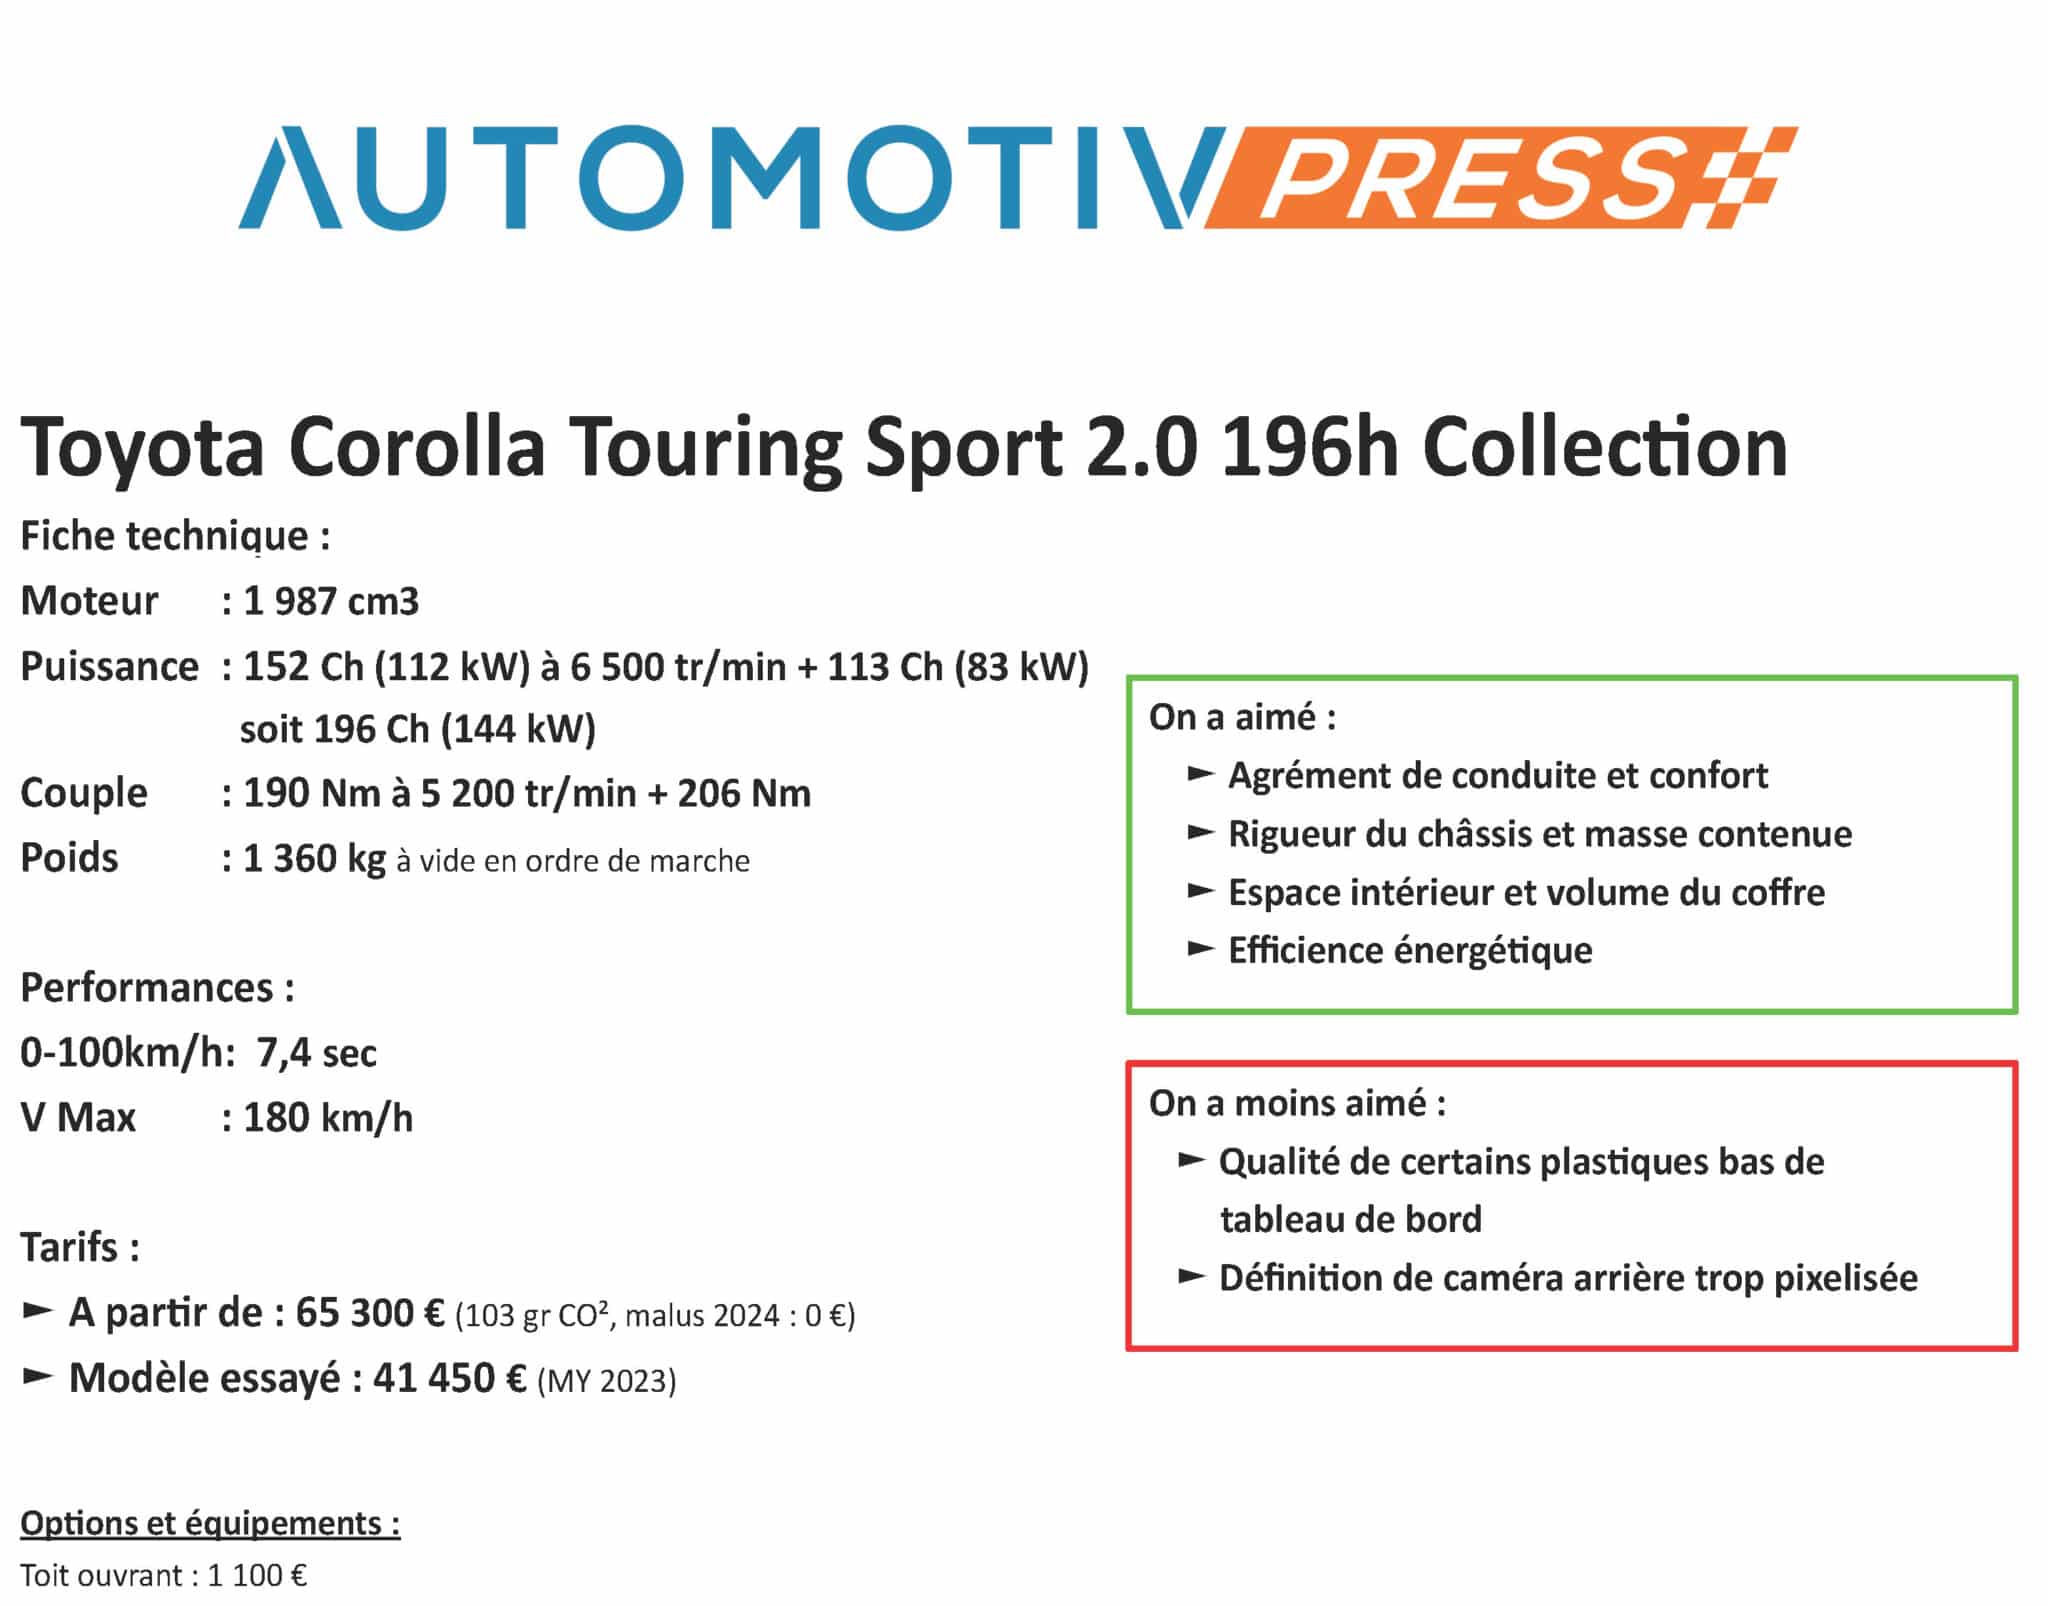 Toyota Corolla Touring Sport hybride 2.0 196h